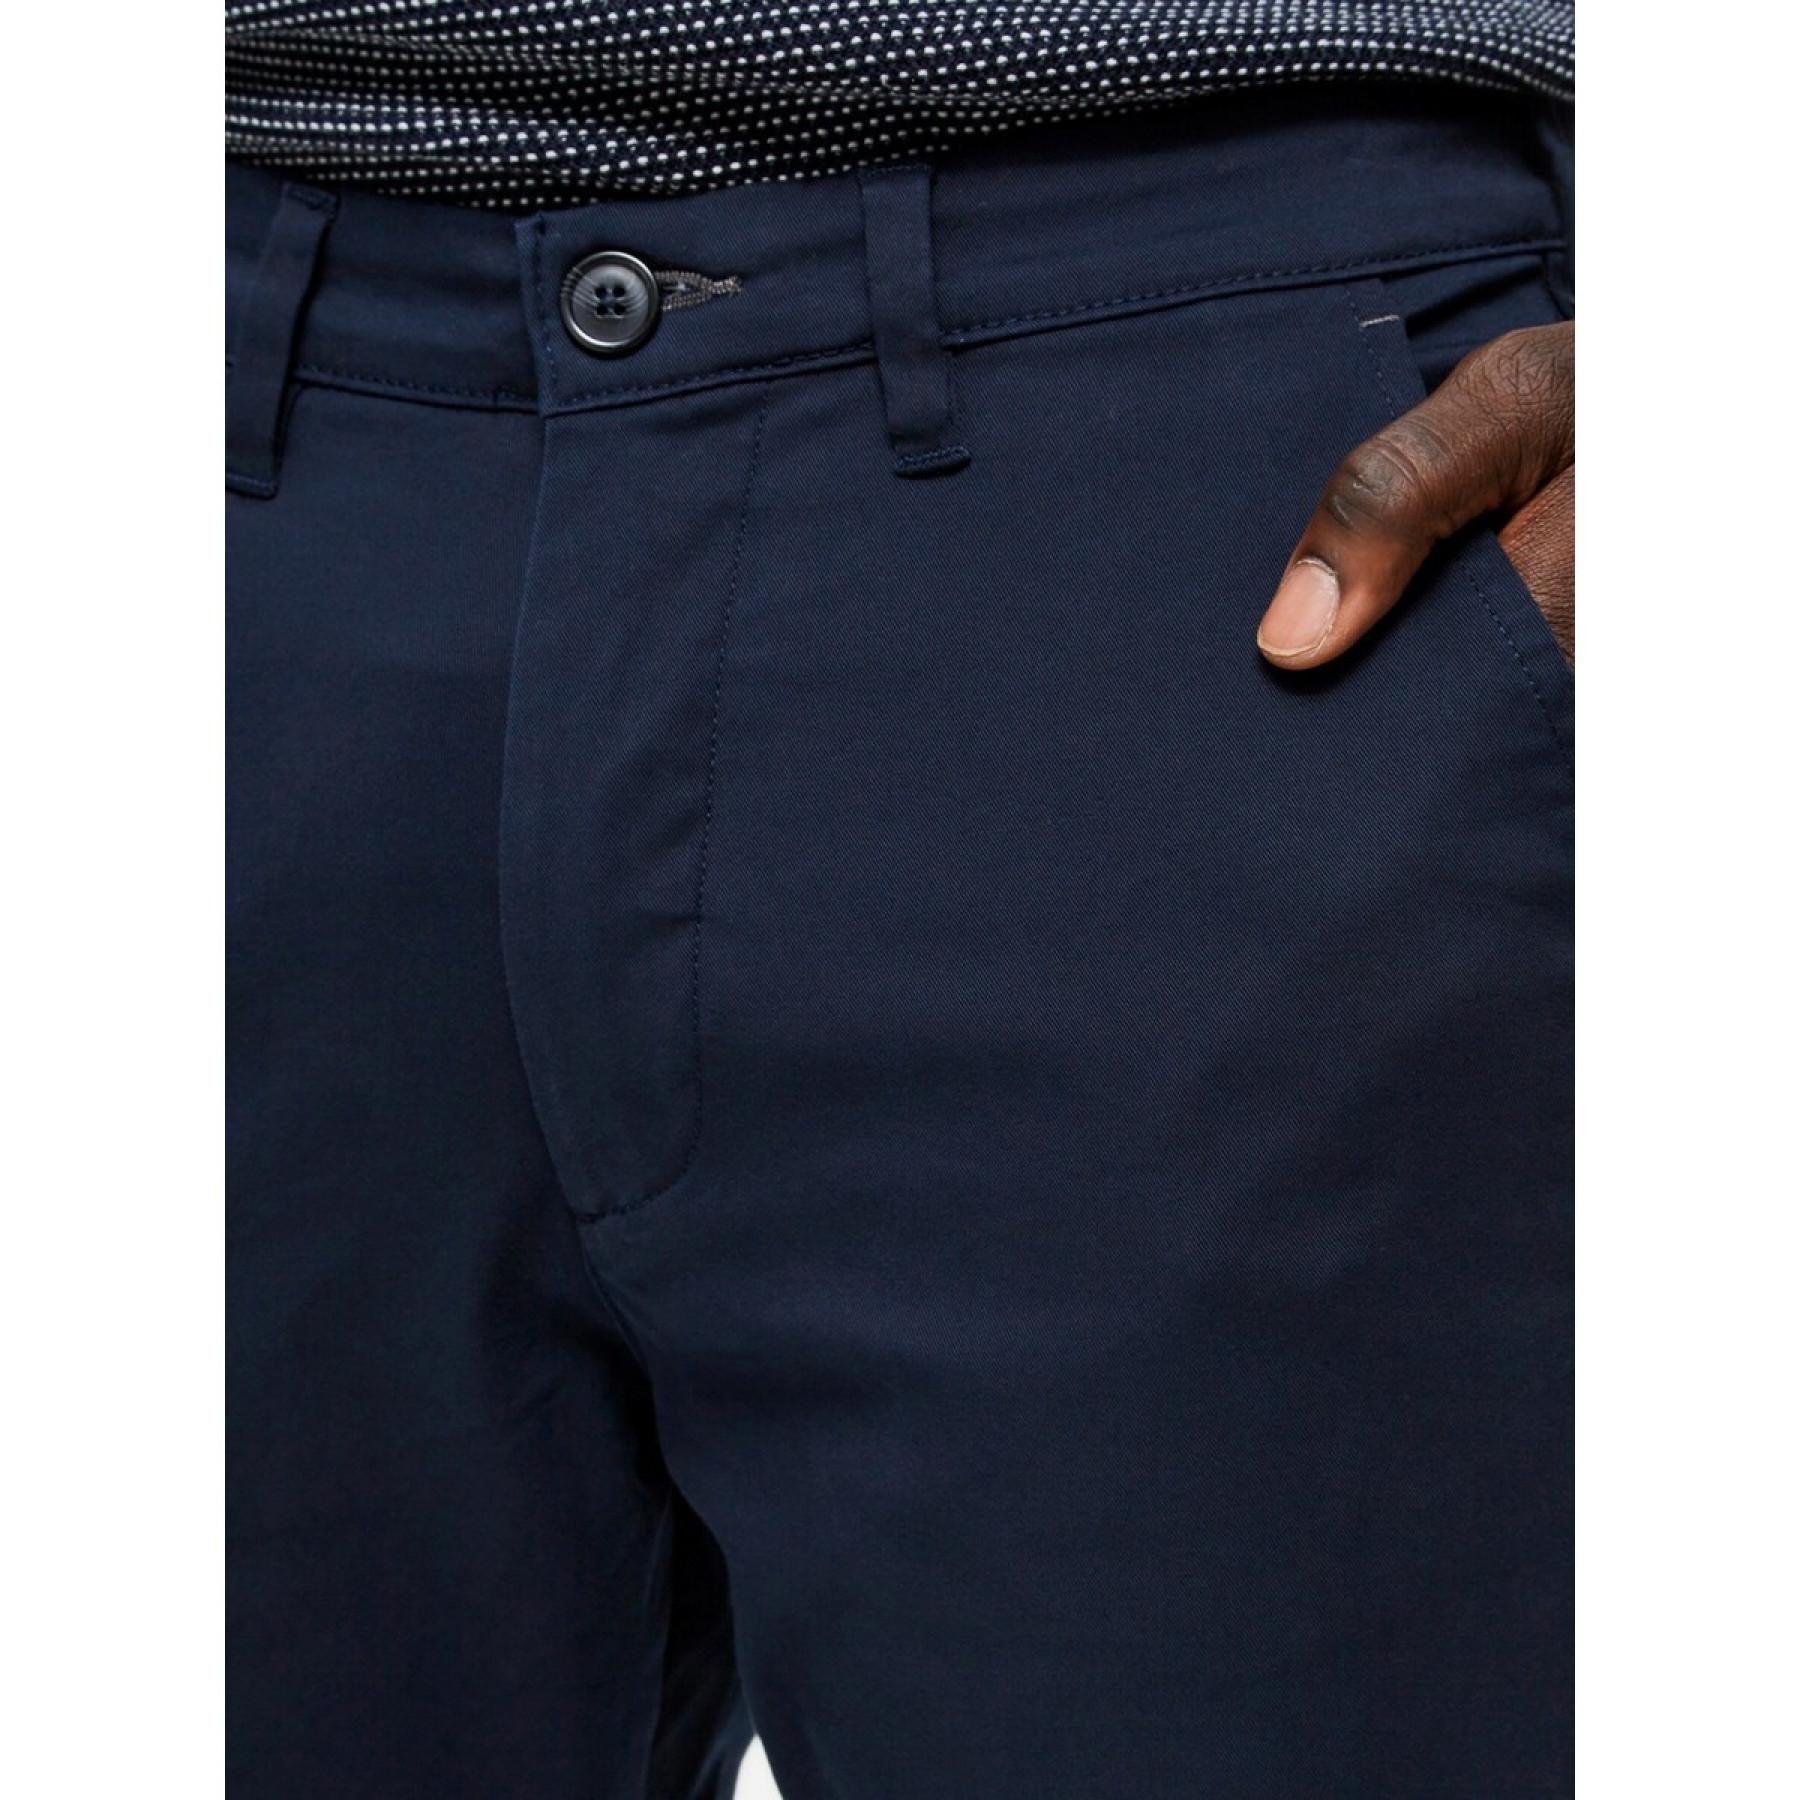 Pantaloni Selected chino Miles flex slim